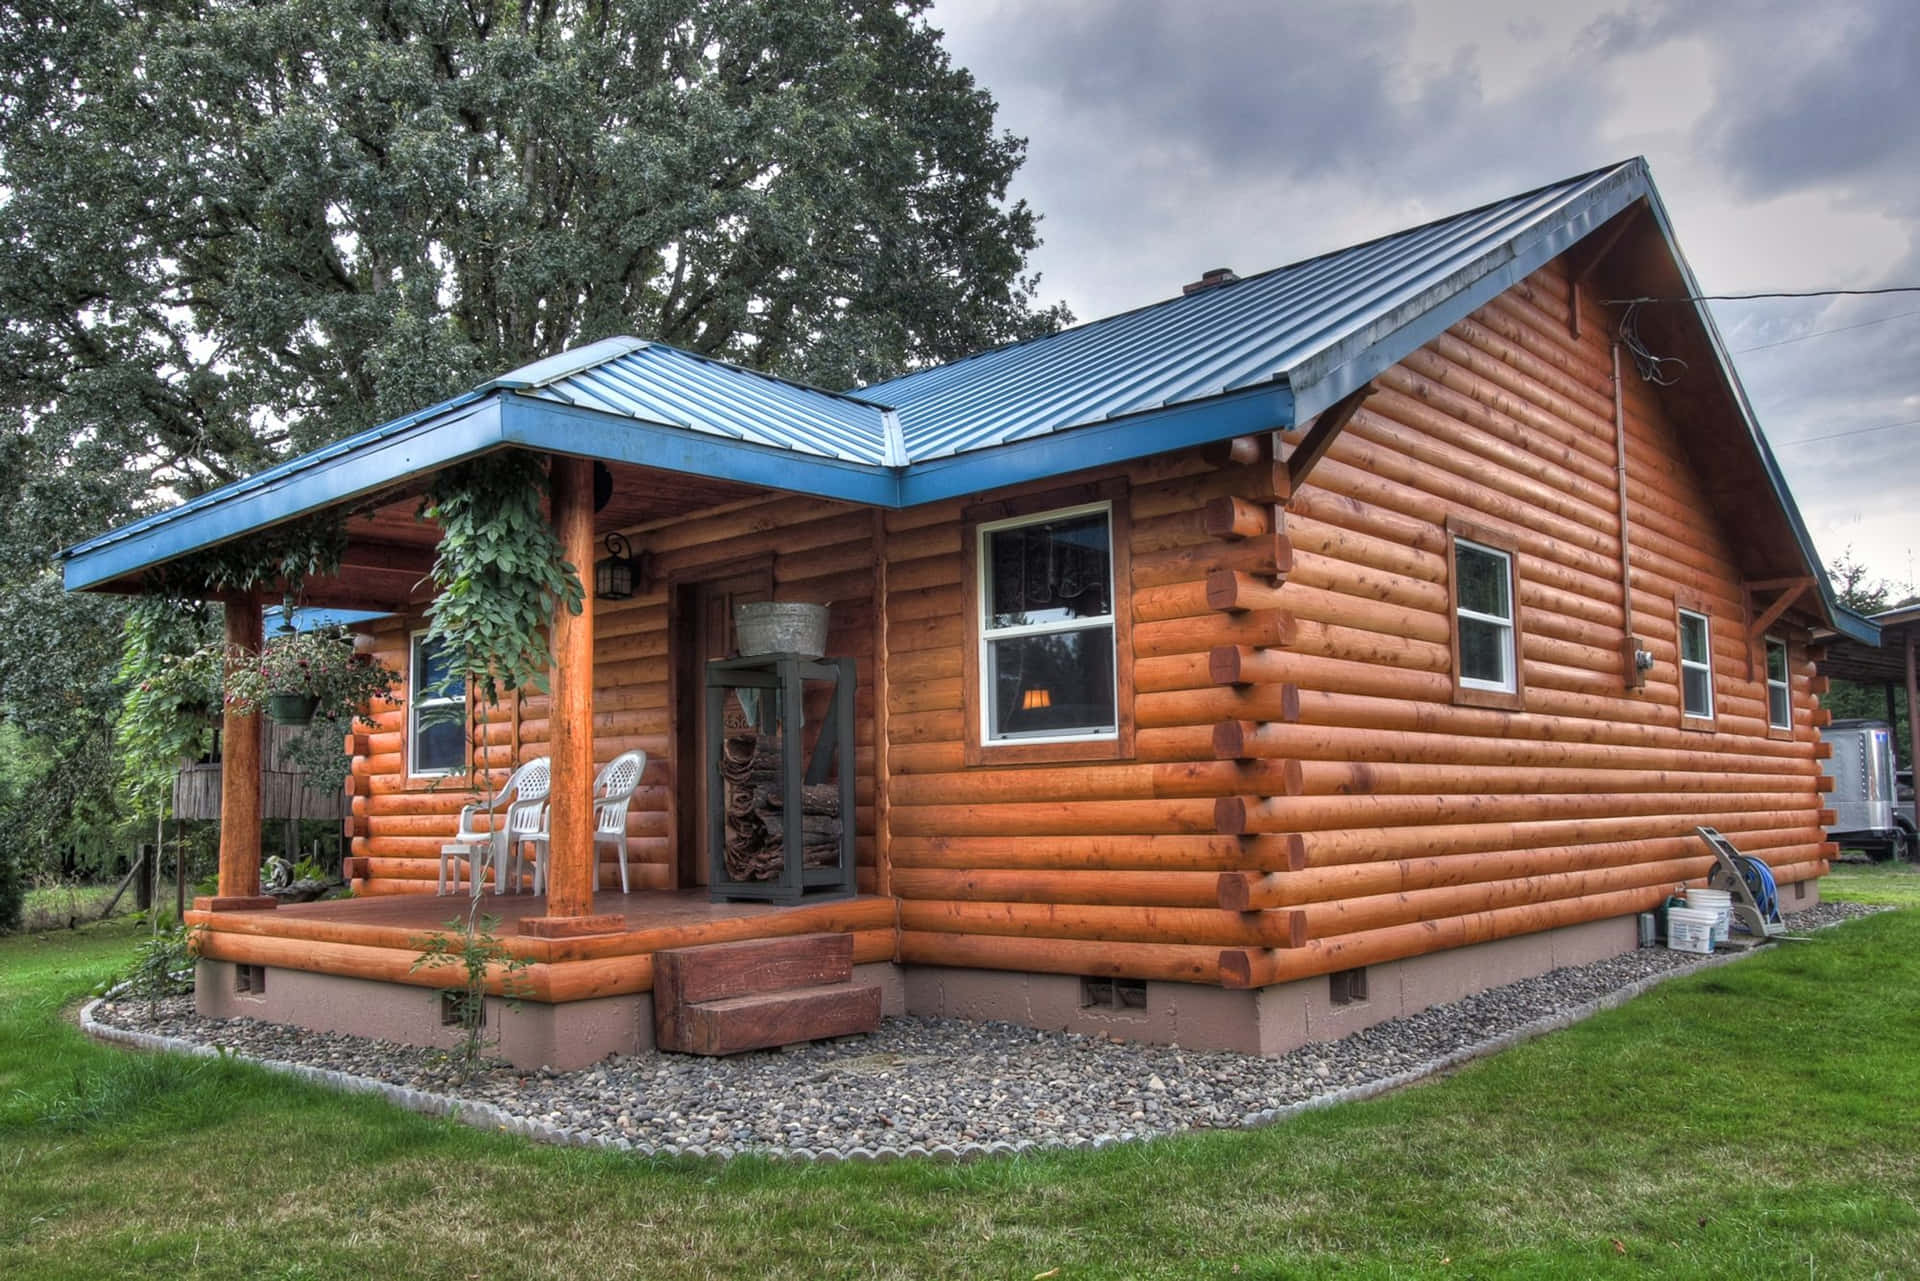 Enjoy a Peaceful Getaway Inside a Log Cabin